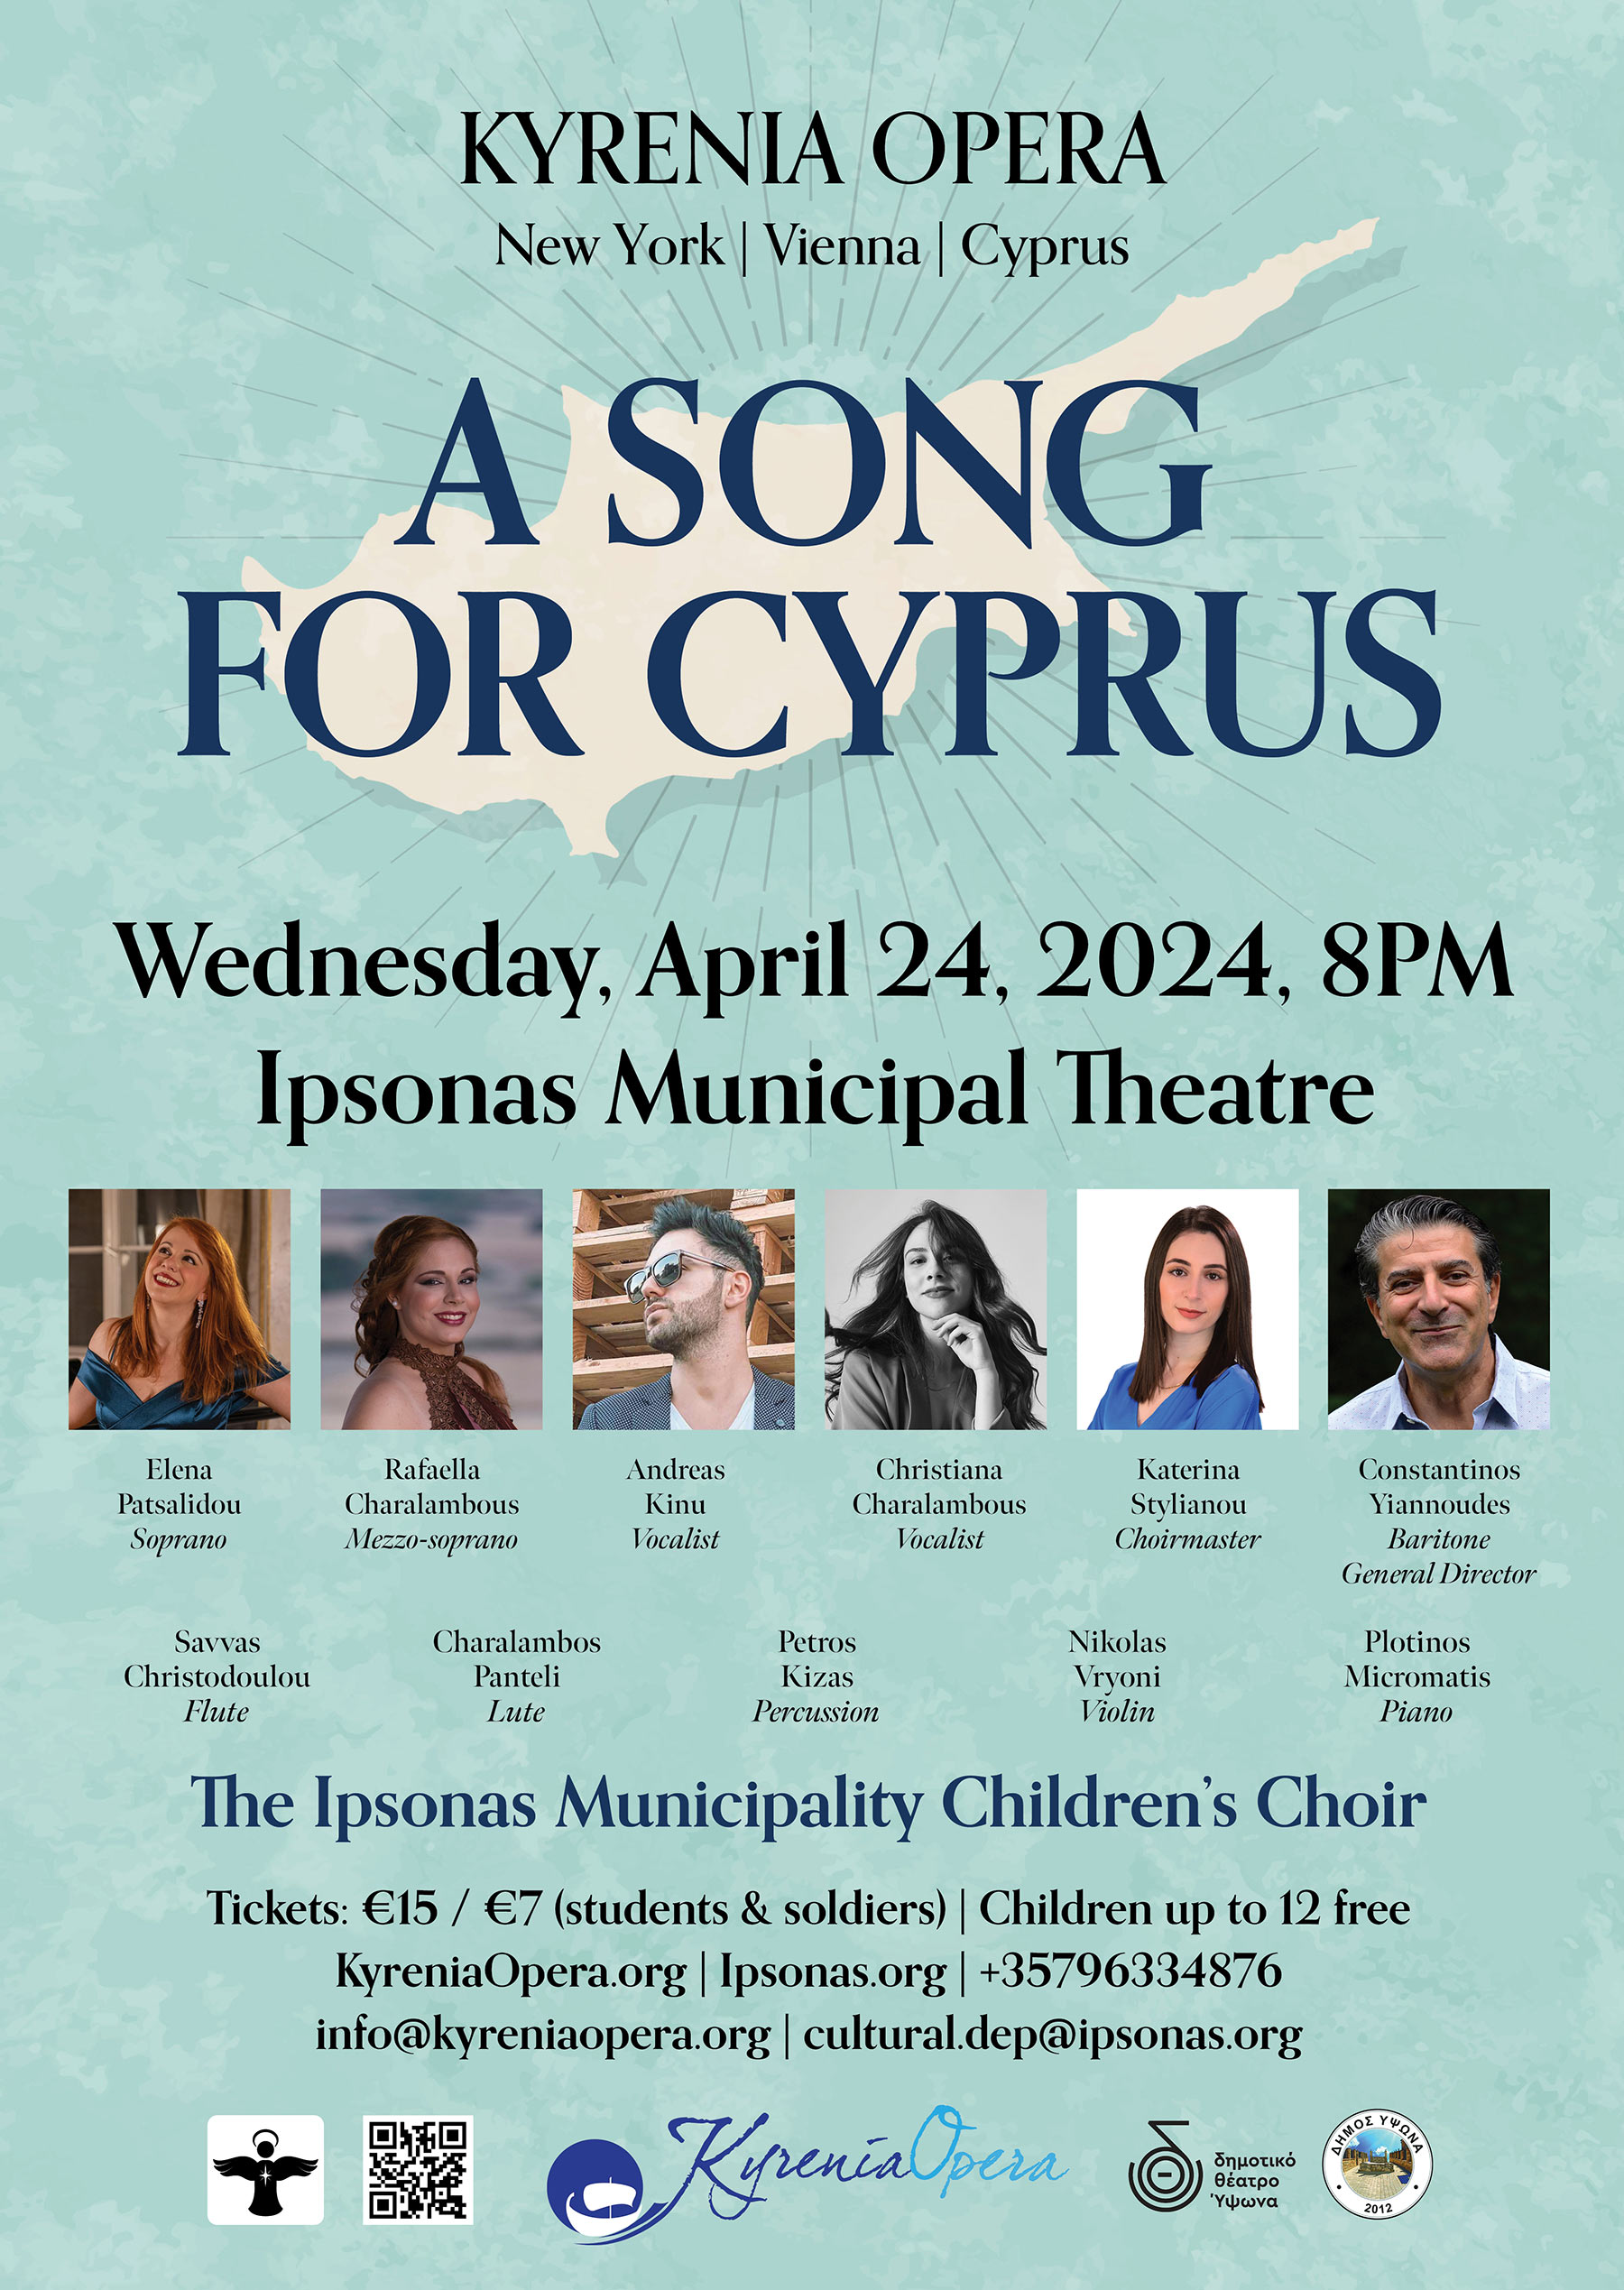 A-Song-For-Cyprus-kyrenia-opera-ipsonas-April-2024